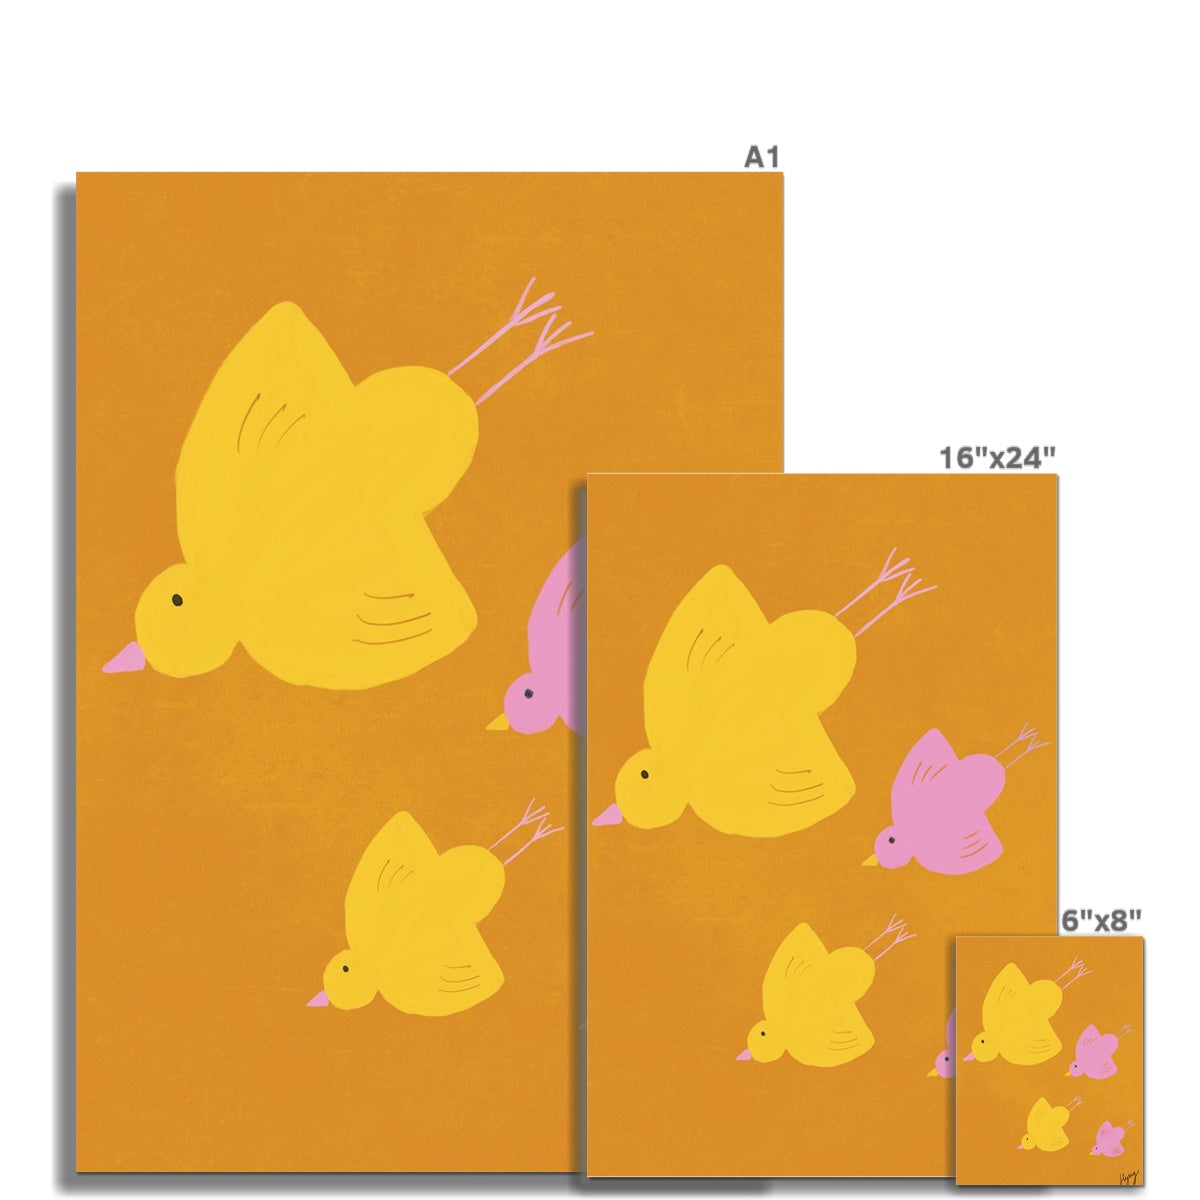 Flying Birds Print - Brown, Pink, Yellow Fine Art Print